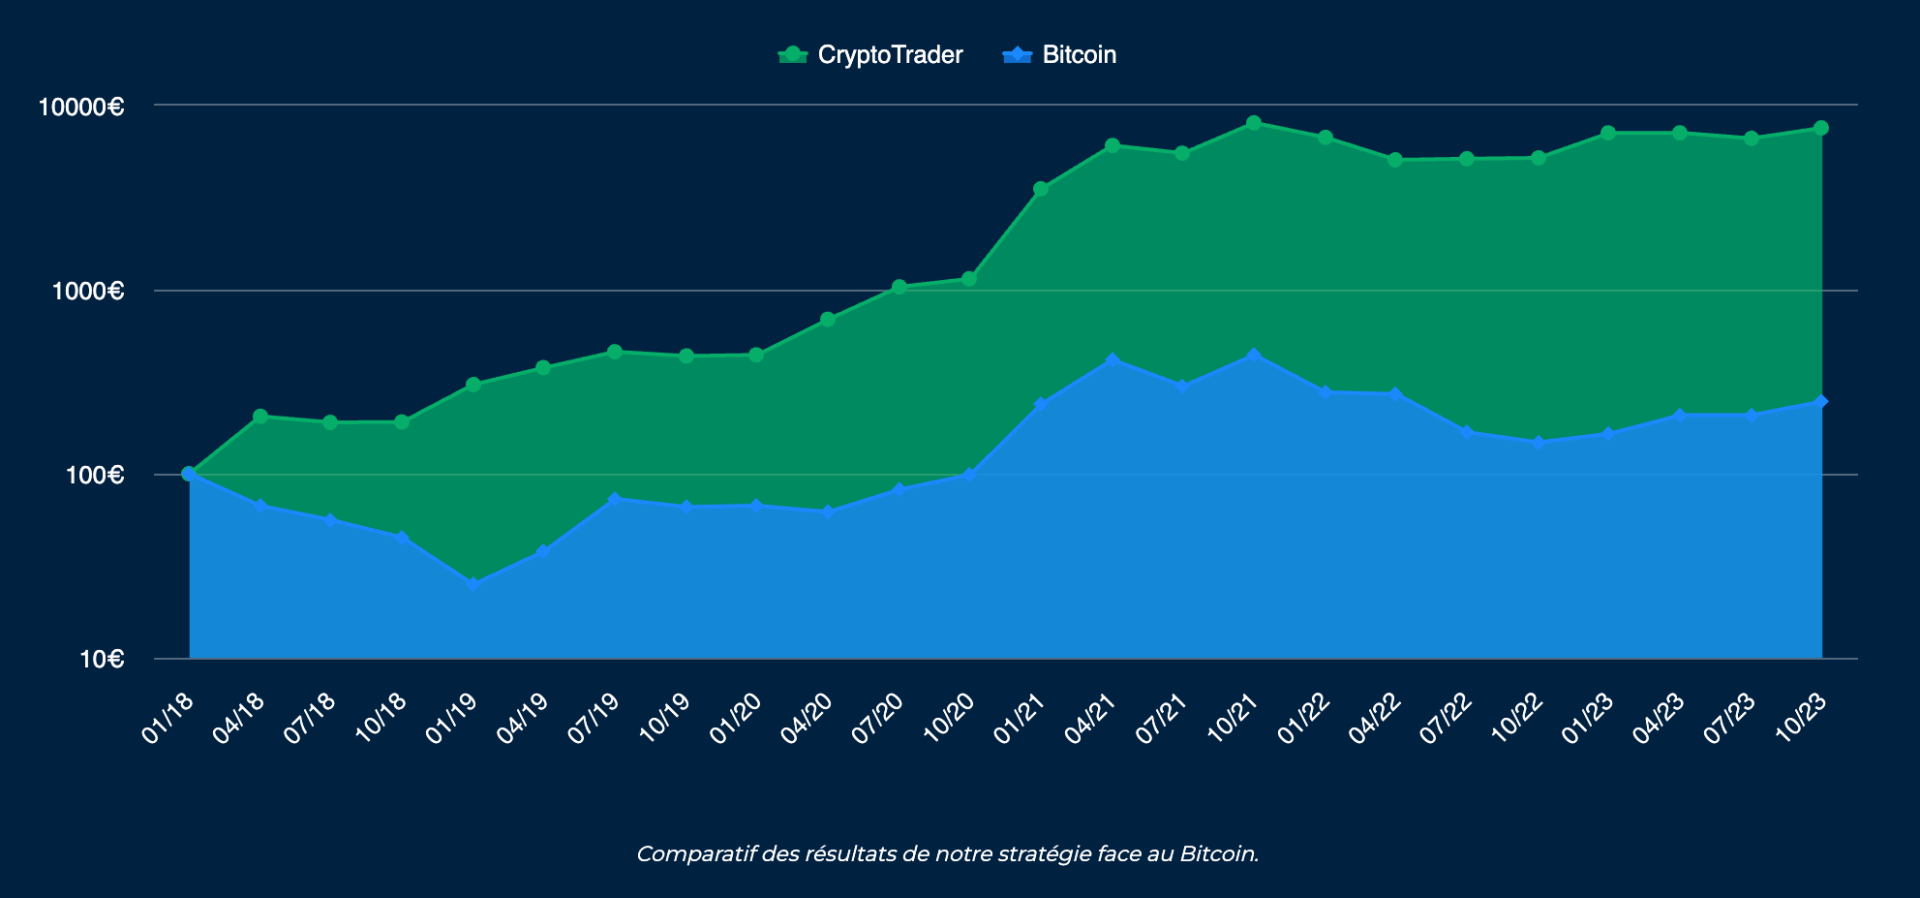 CryptoTrader est plus performant que le Bitcoin depuis janvier 2018. 